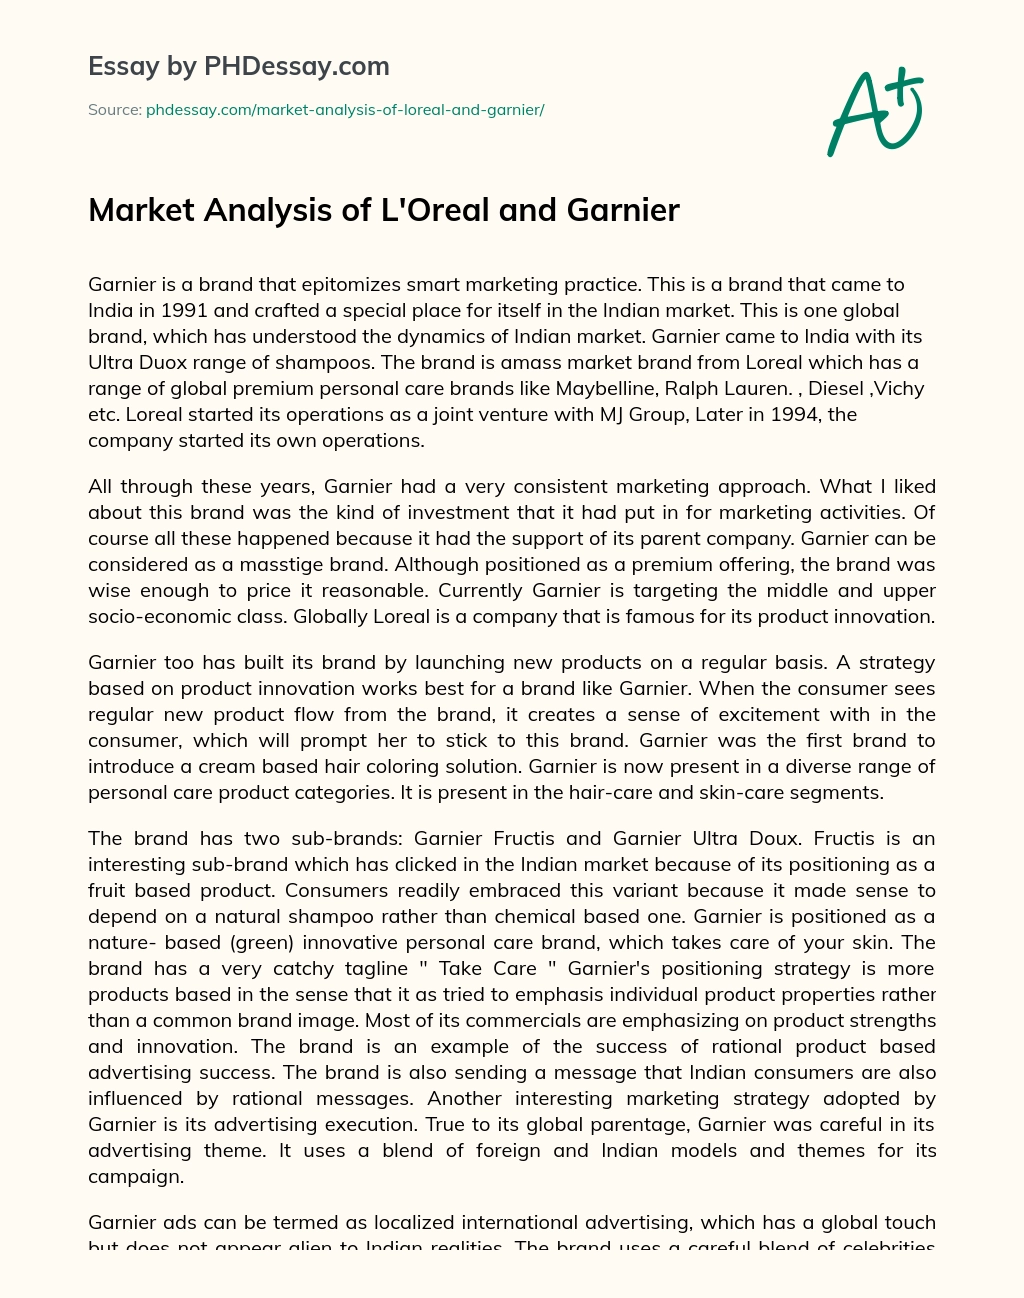 Market Analysis of L’Oreal and Garnier essay